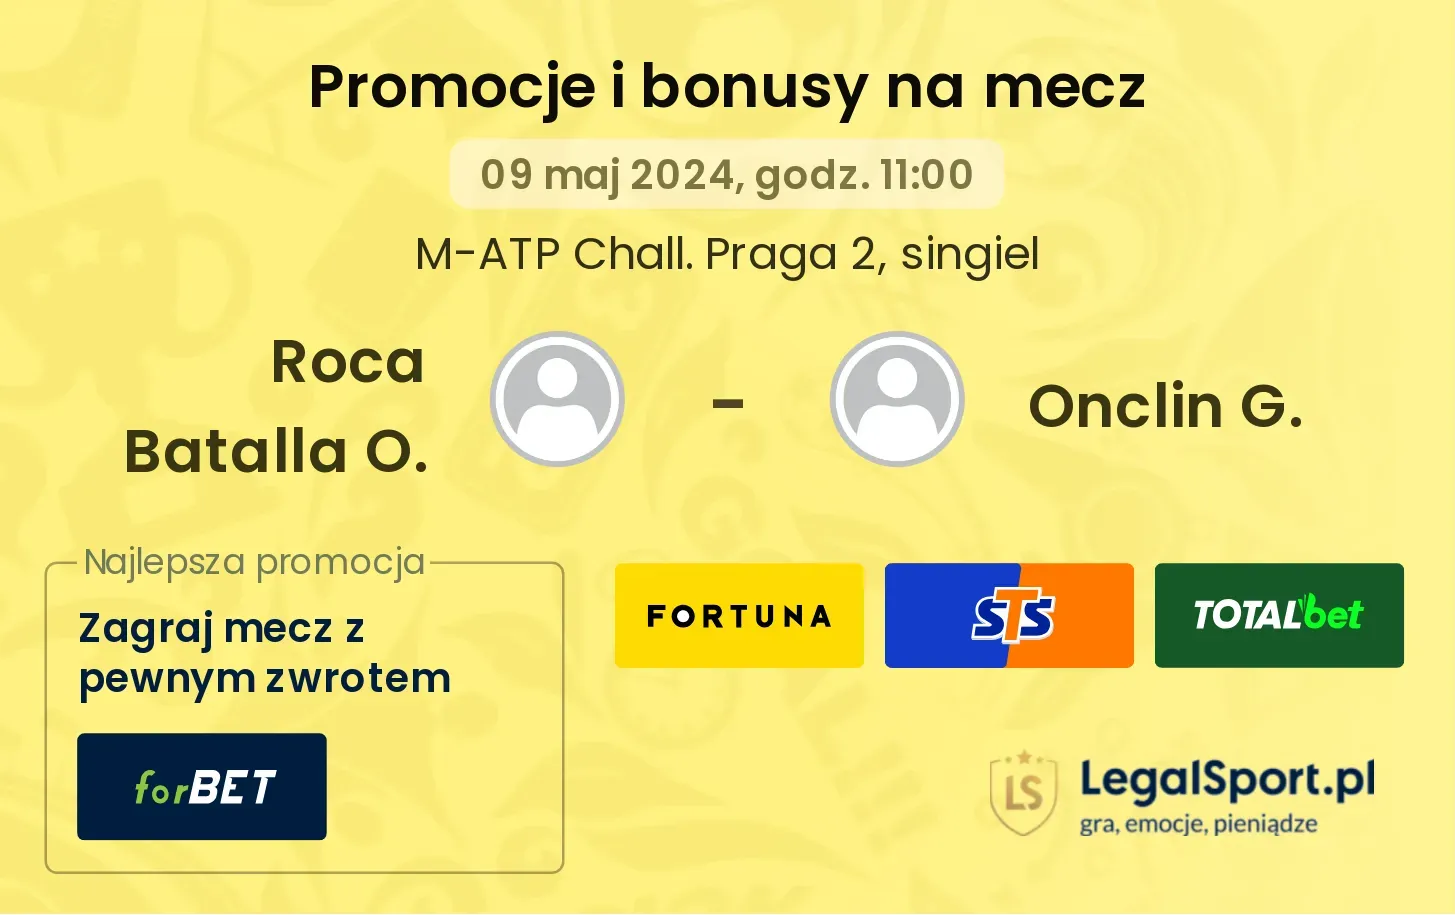 Roca Batalla O. - Onclin G. promocje bonusy na mecz